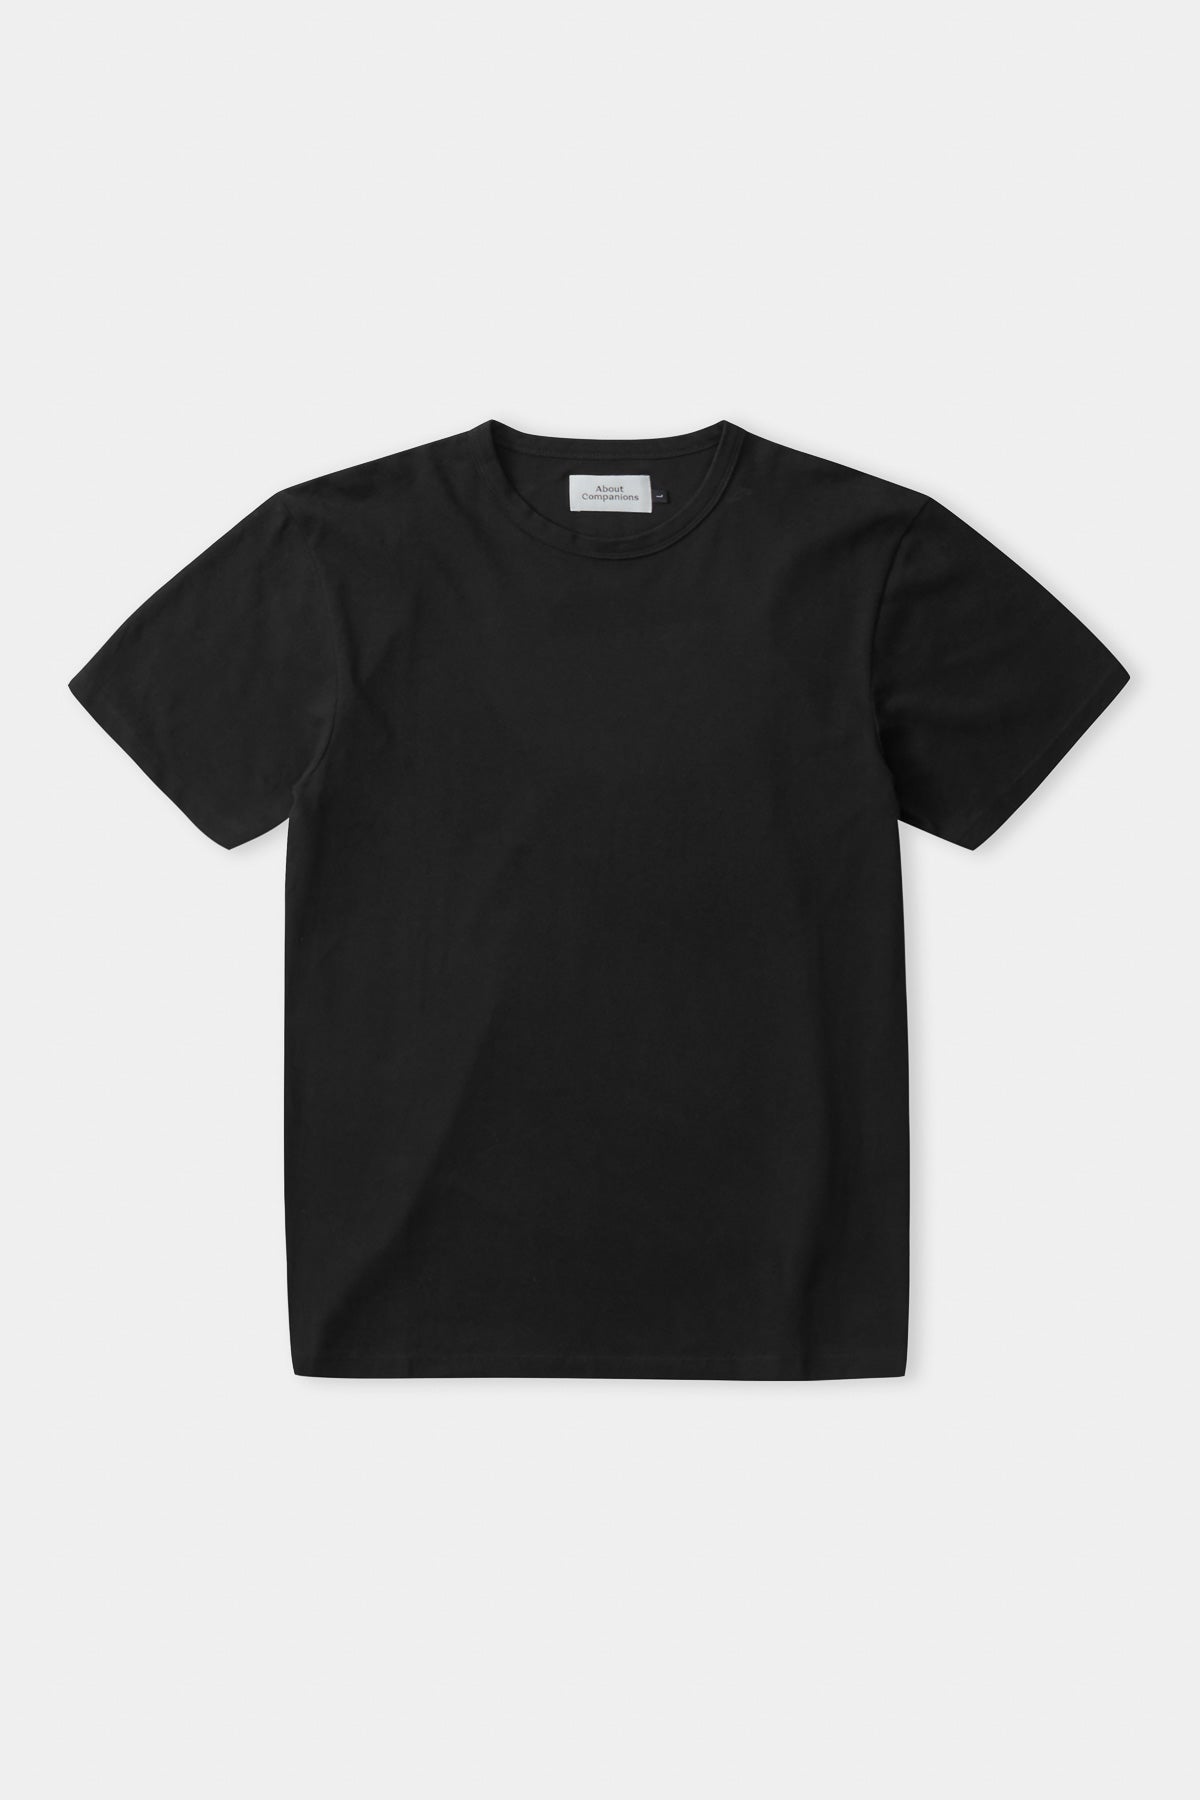 LIRON t-shirt eco pique black